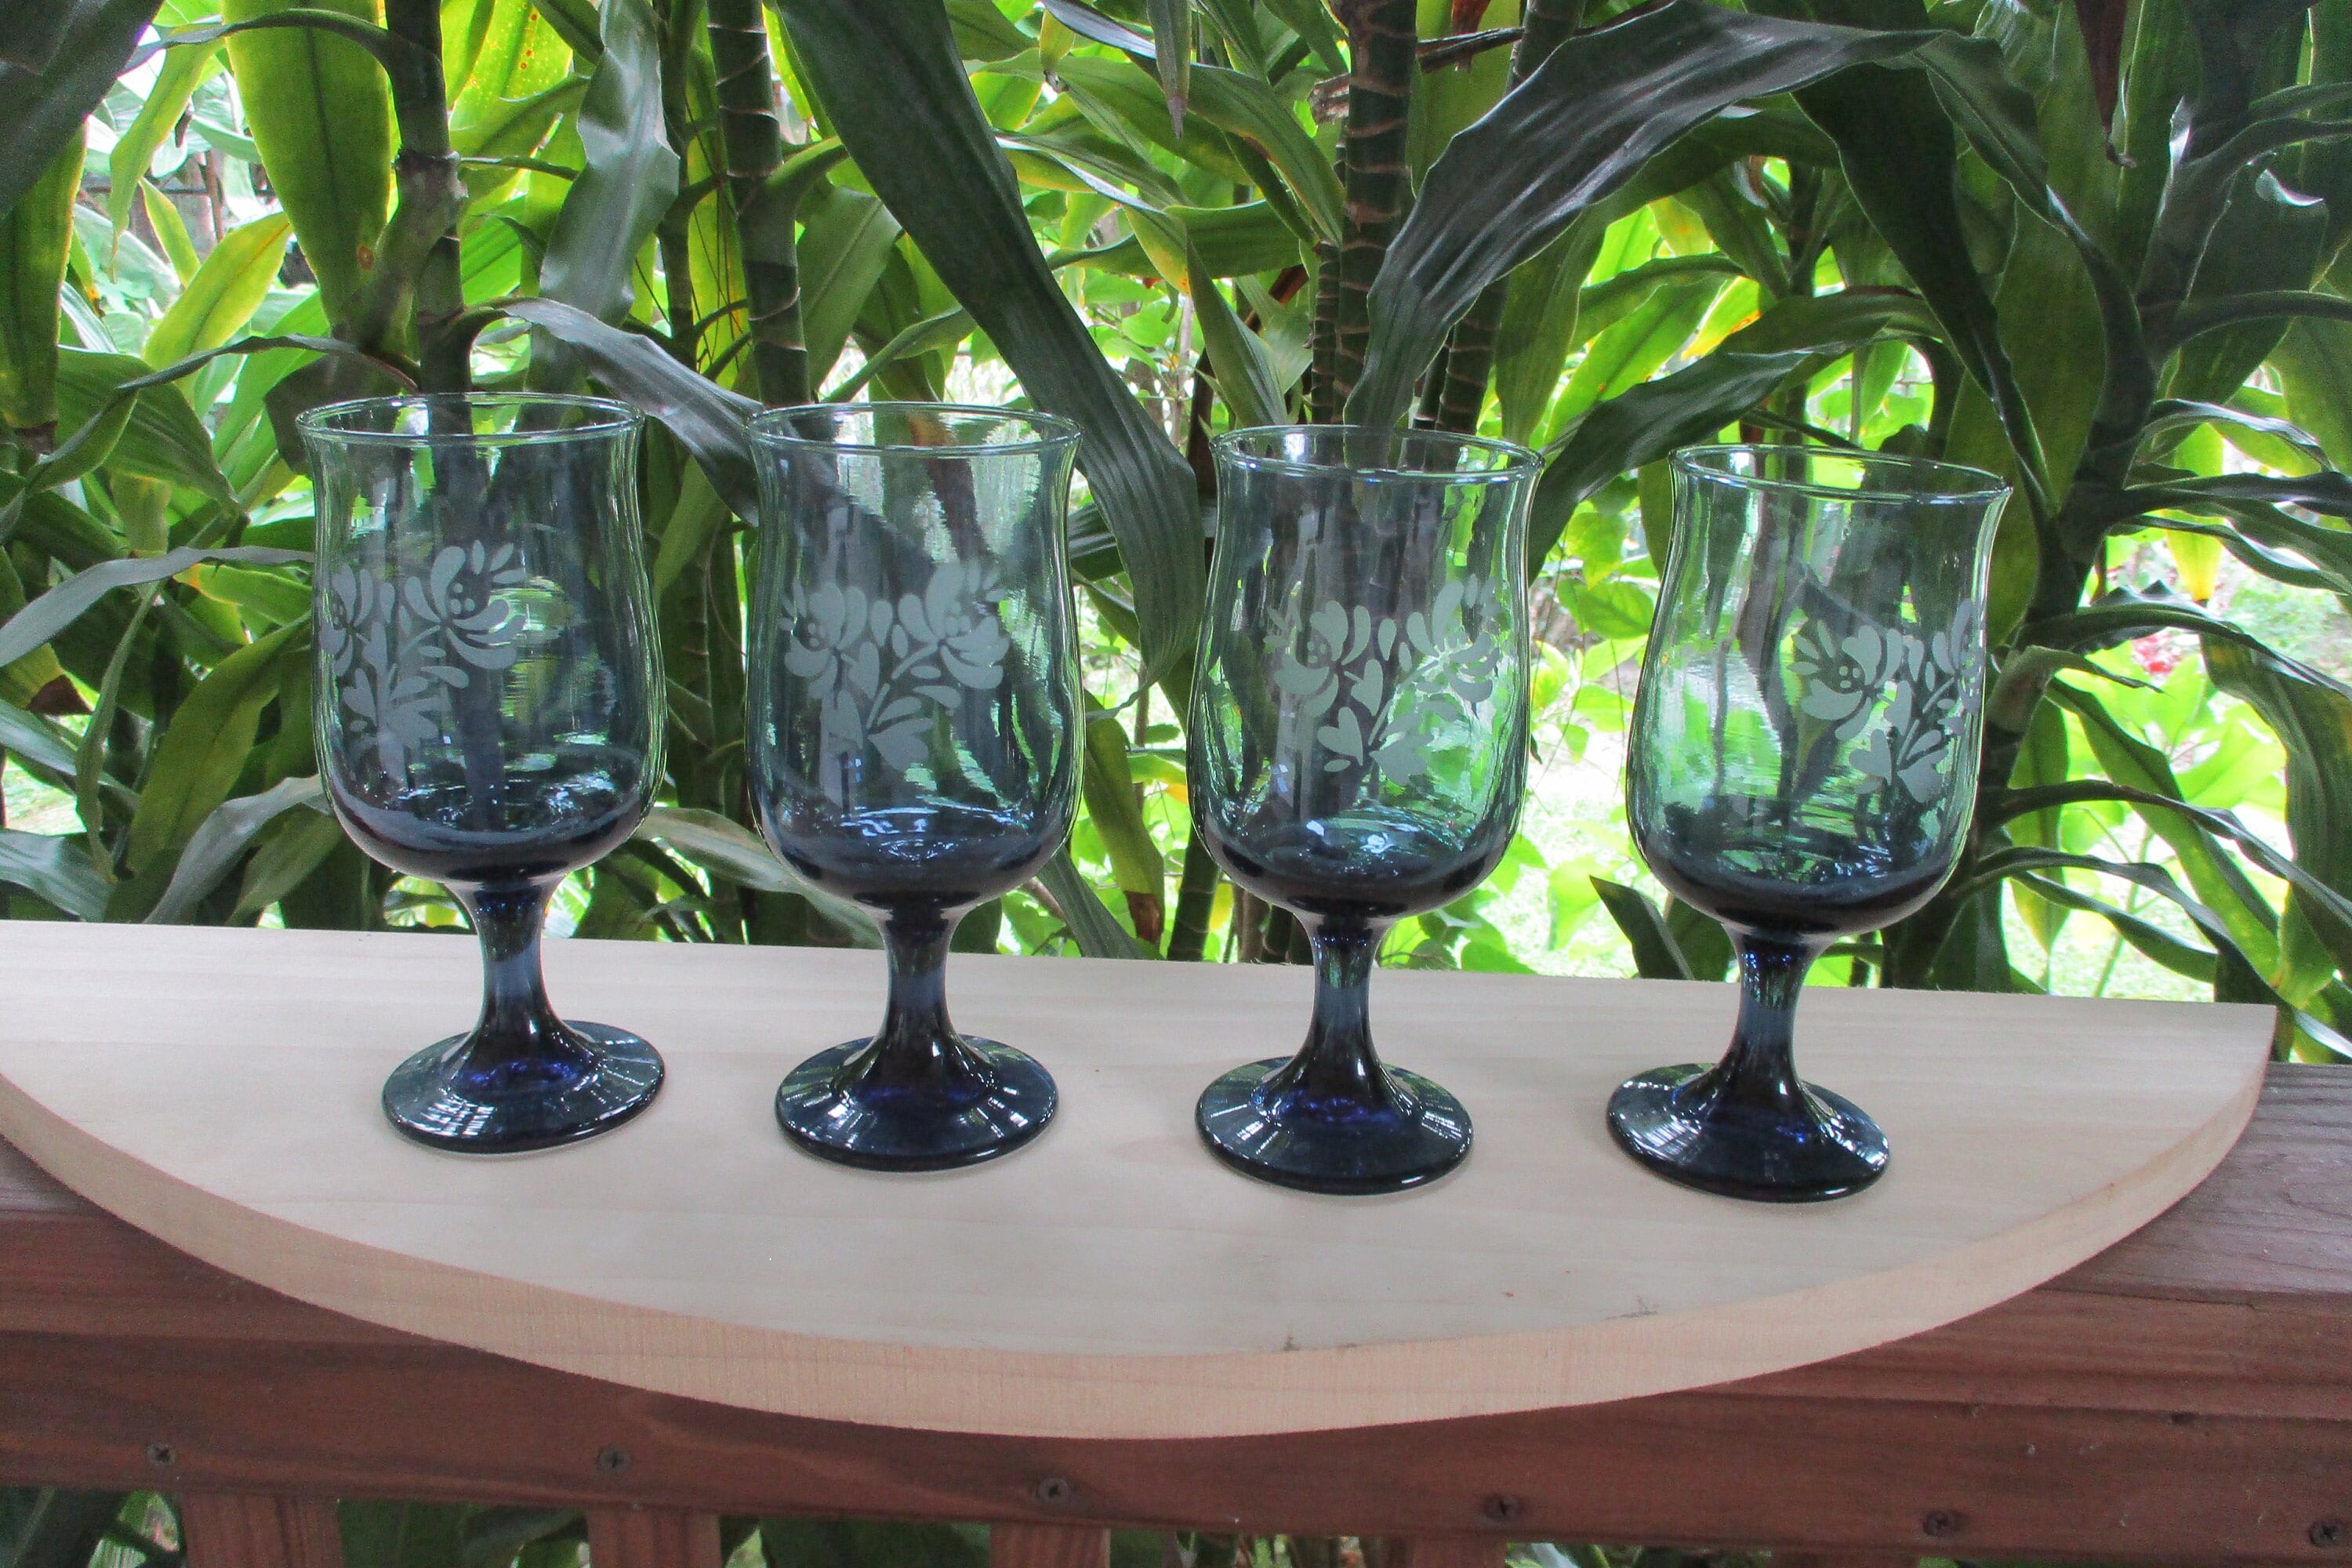 Set of 8 Wine Glasses/Goblets, 8 oz. 6.25 x 2.75 Restaurant/Catering,  Barware